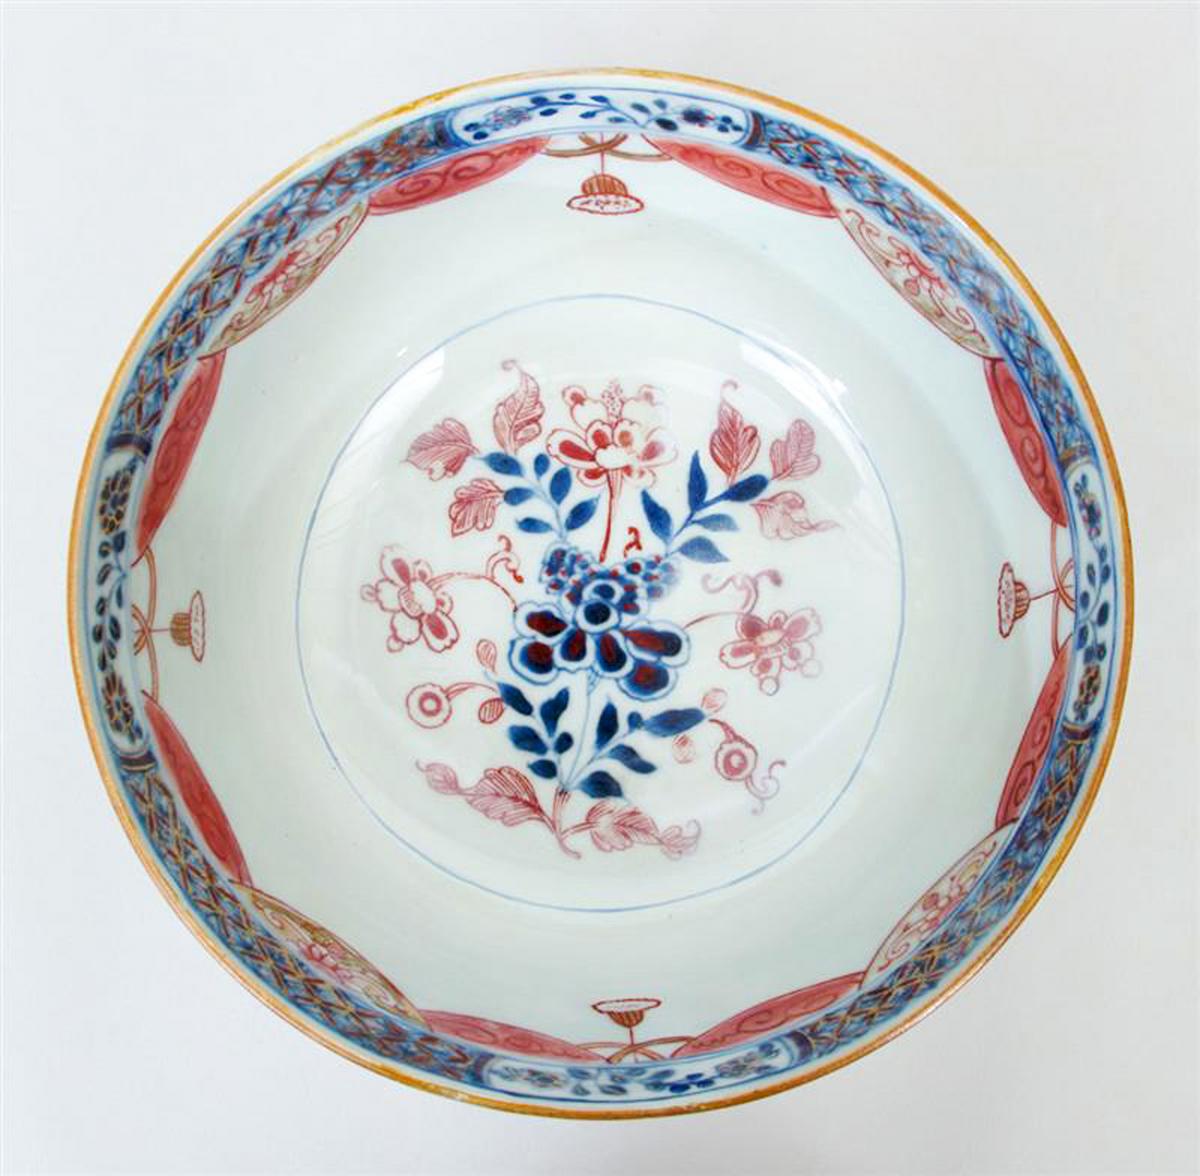 Dutch Decorated Chinese Export Imari Bowl, Circa 1770